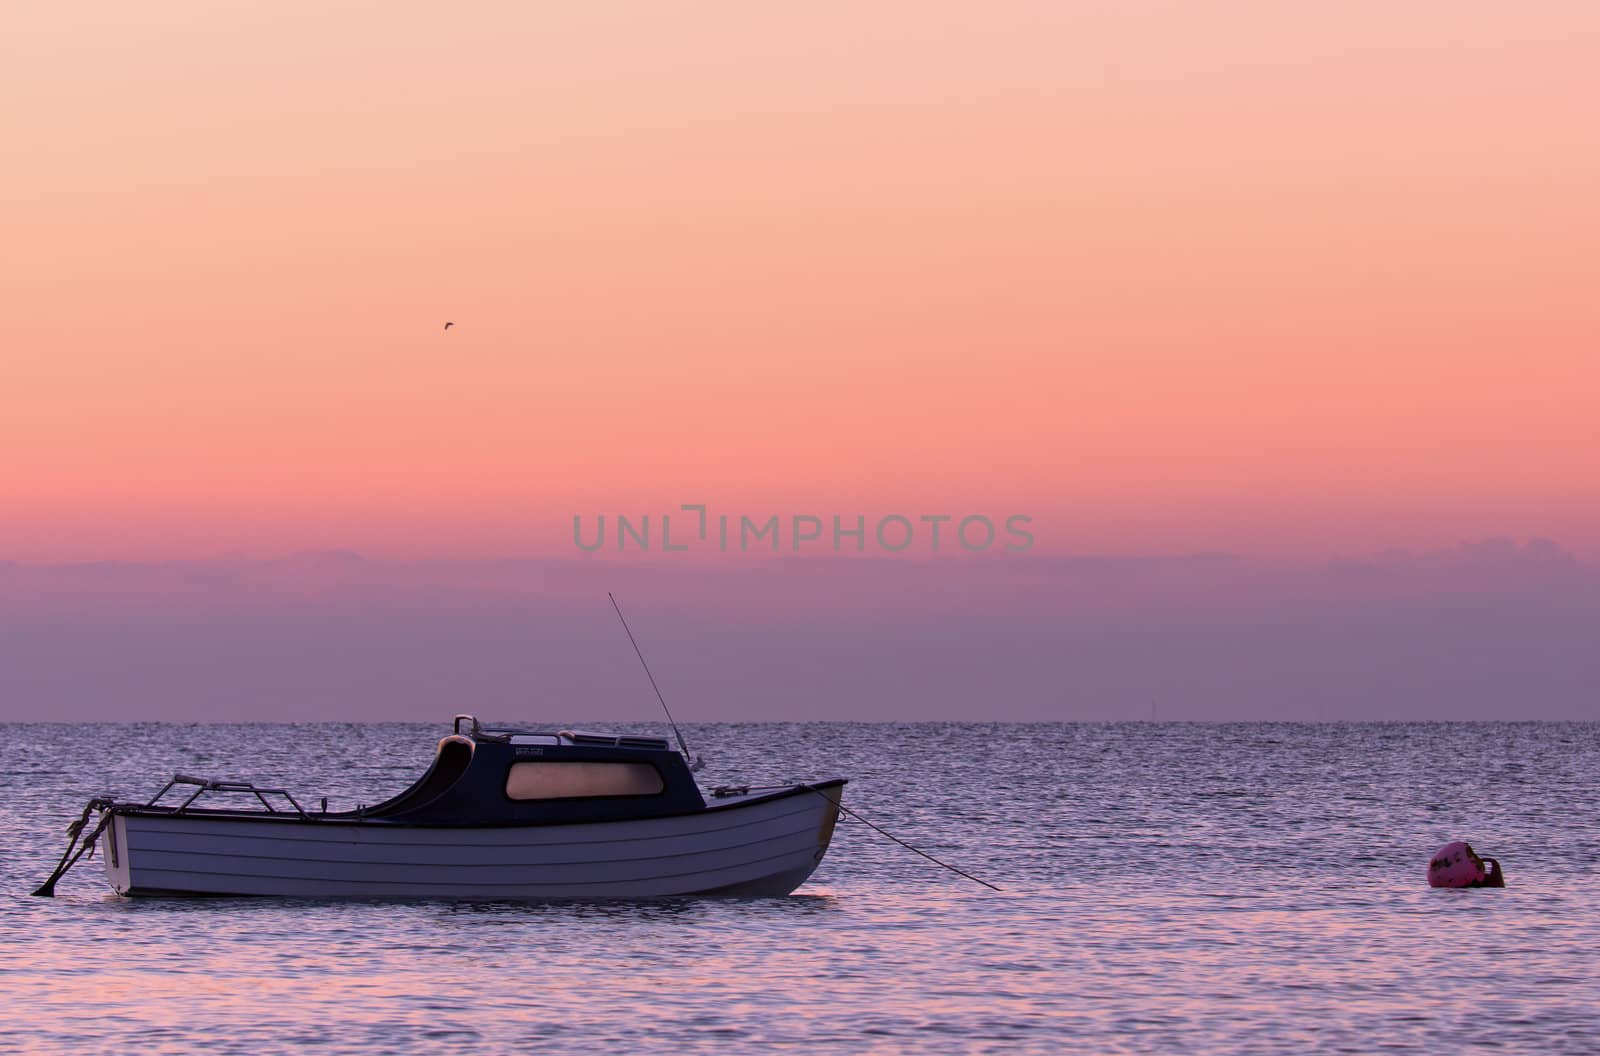 Small boat moored off the Kent coast at dusk